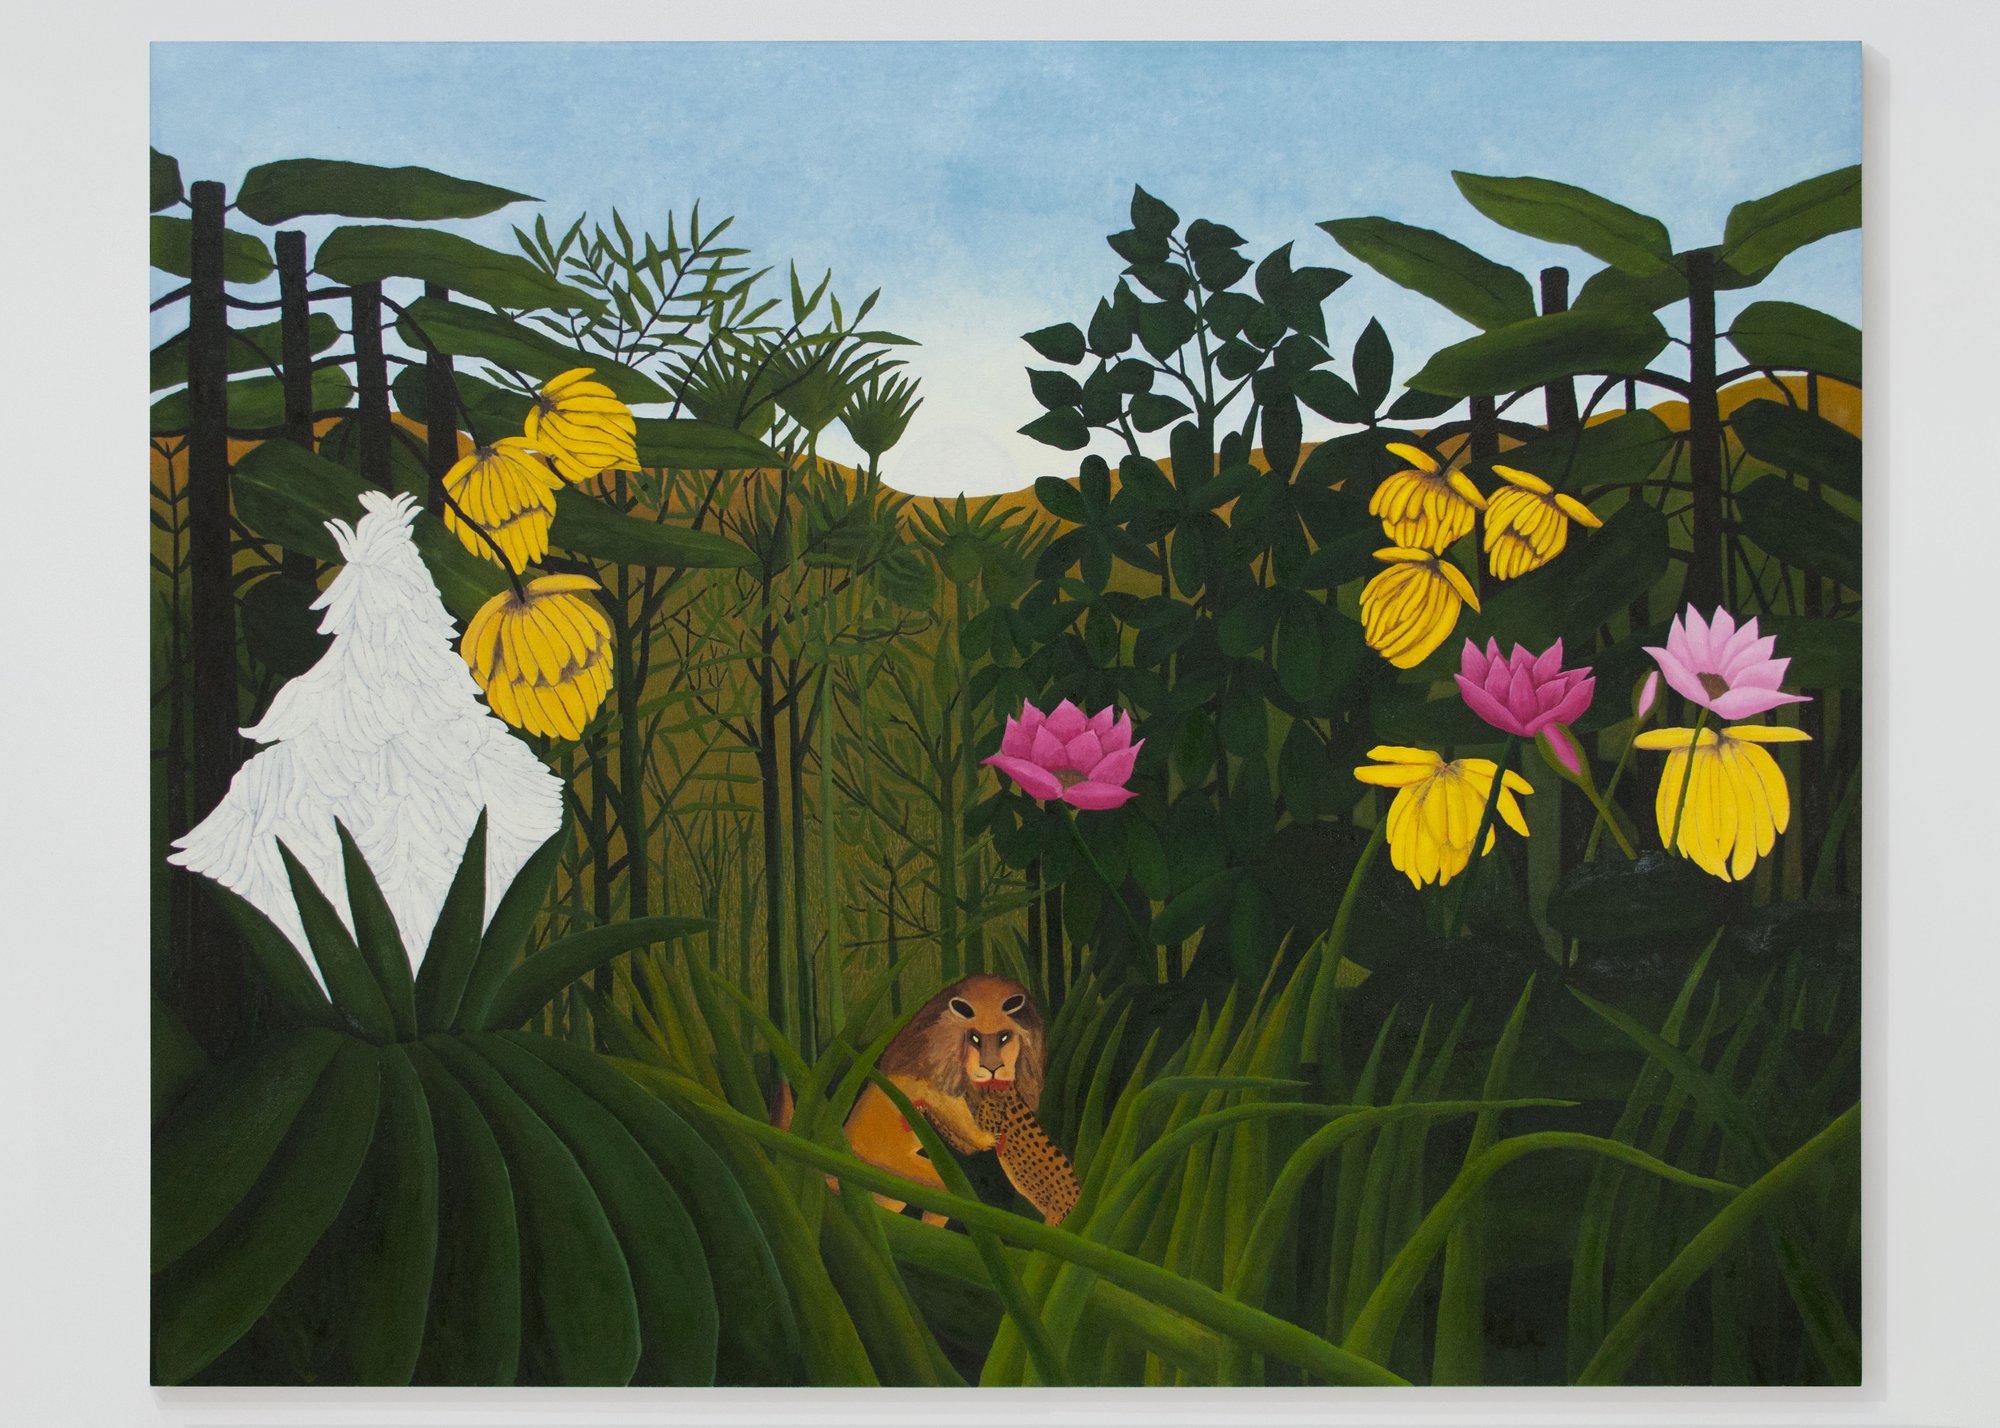 Leidy Churchman, Rousseau, oil on linen, 167.6 x 213.4 cm (66 x 84 in), 2015